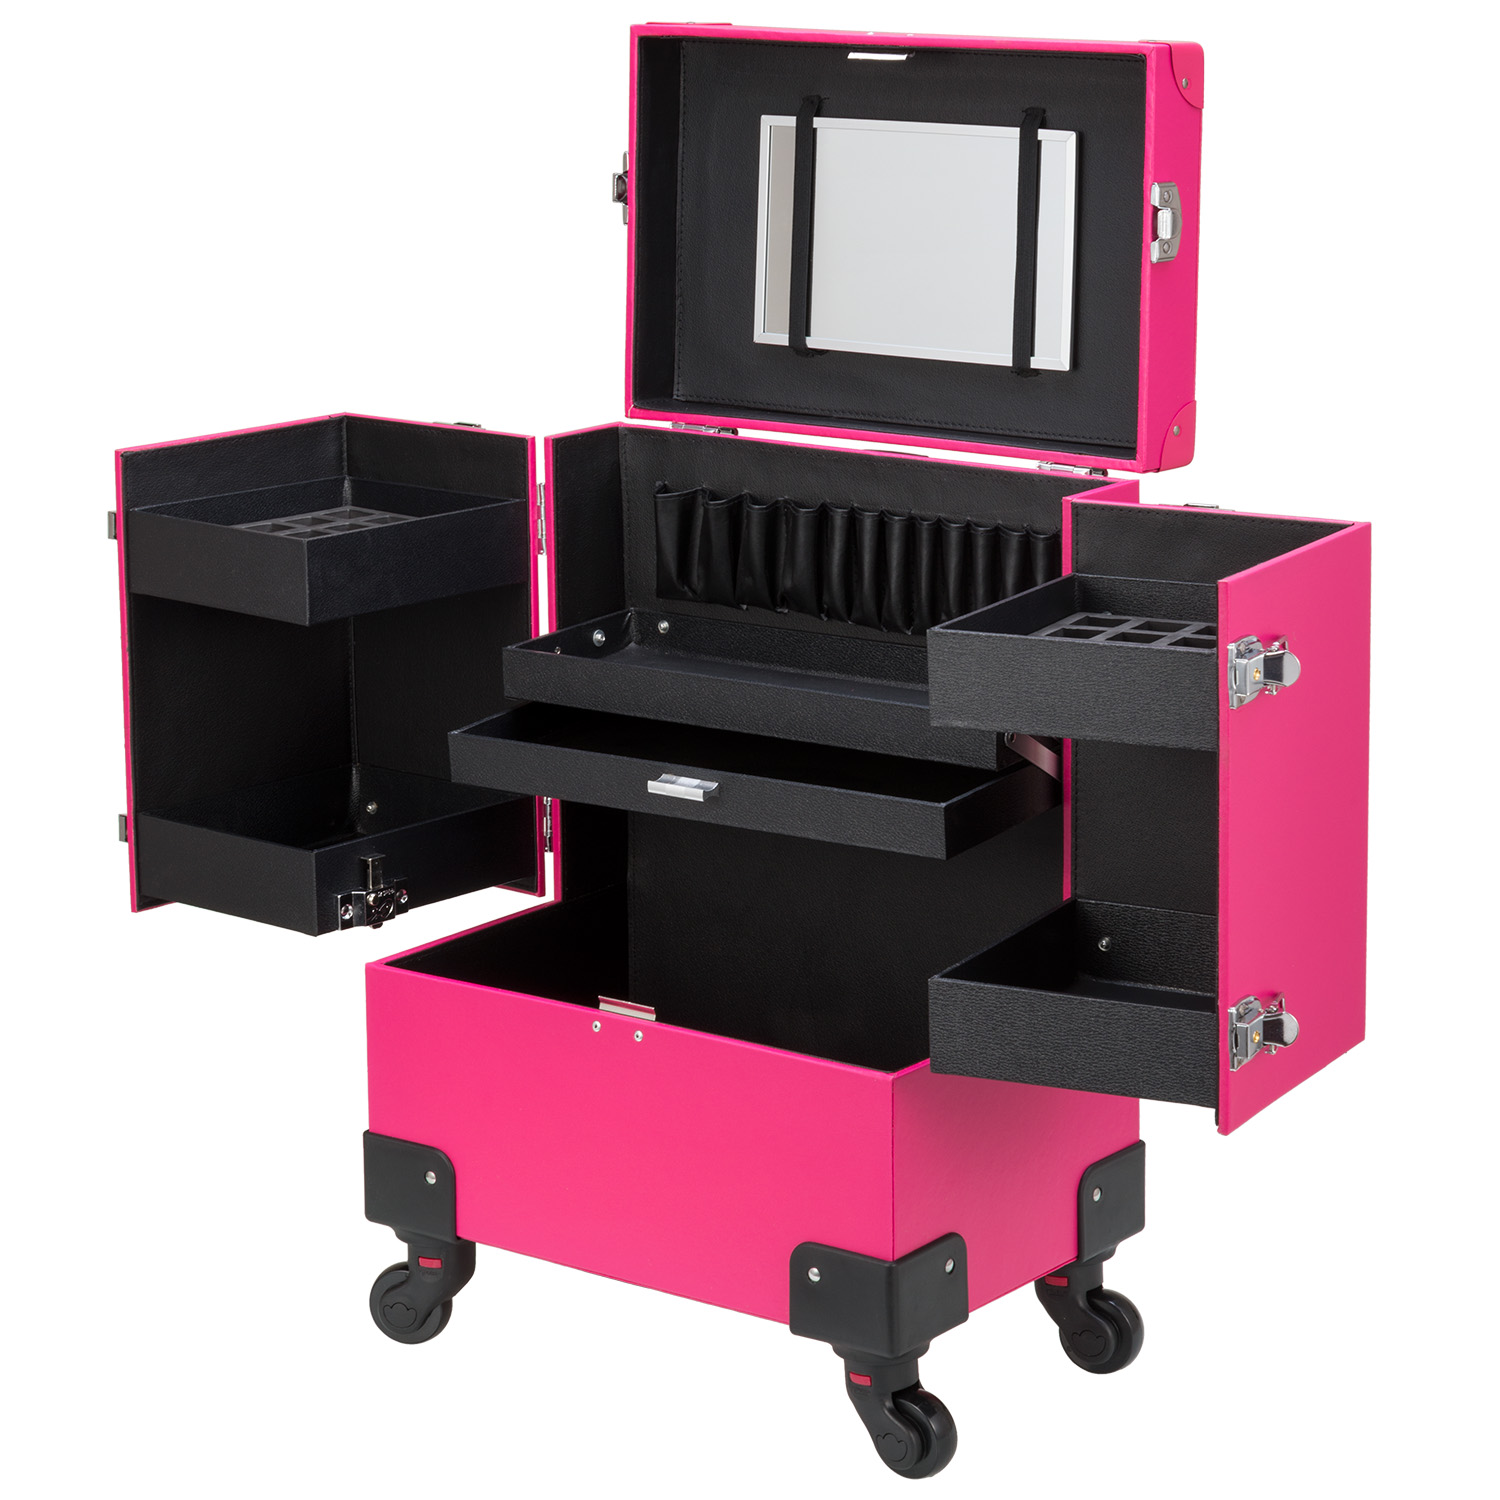 Ollieroo Rolling Wheels Makeup Train Case Lockable PU Artist Makeup Cosmetic Train Case,Rose-Pink - image 3 of 9